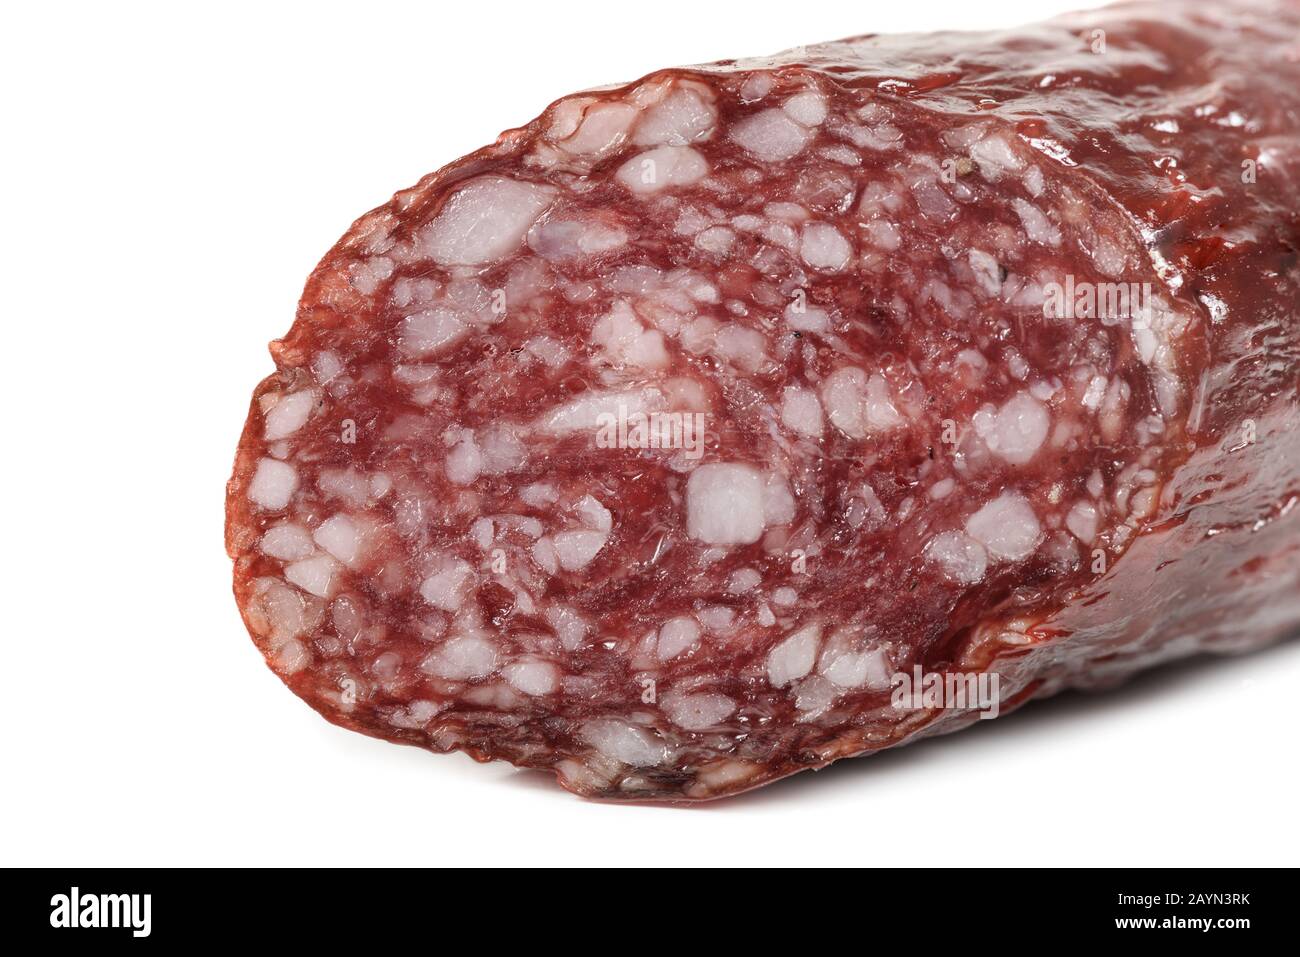 Macro view of Salami smoked sausage stick isolated on white background Stock Photo